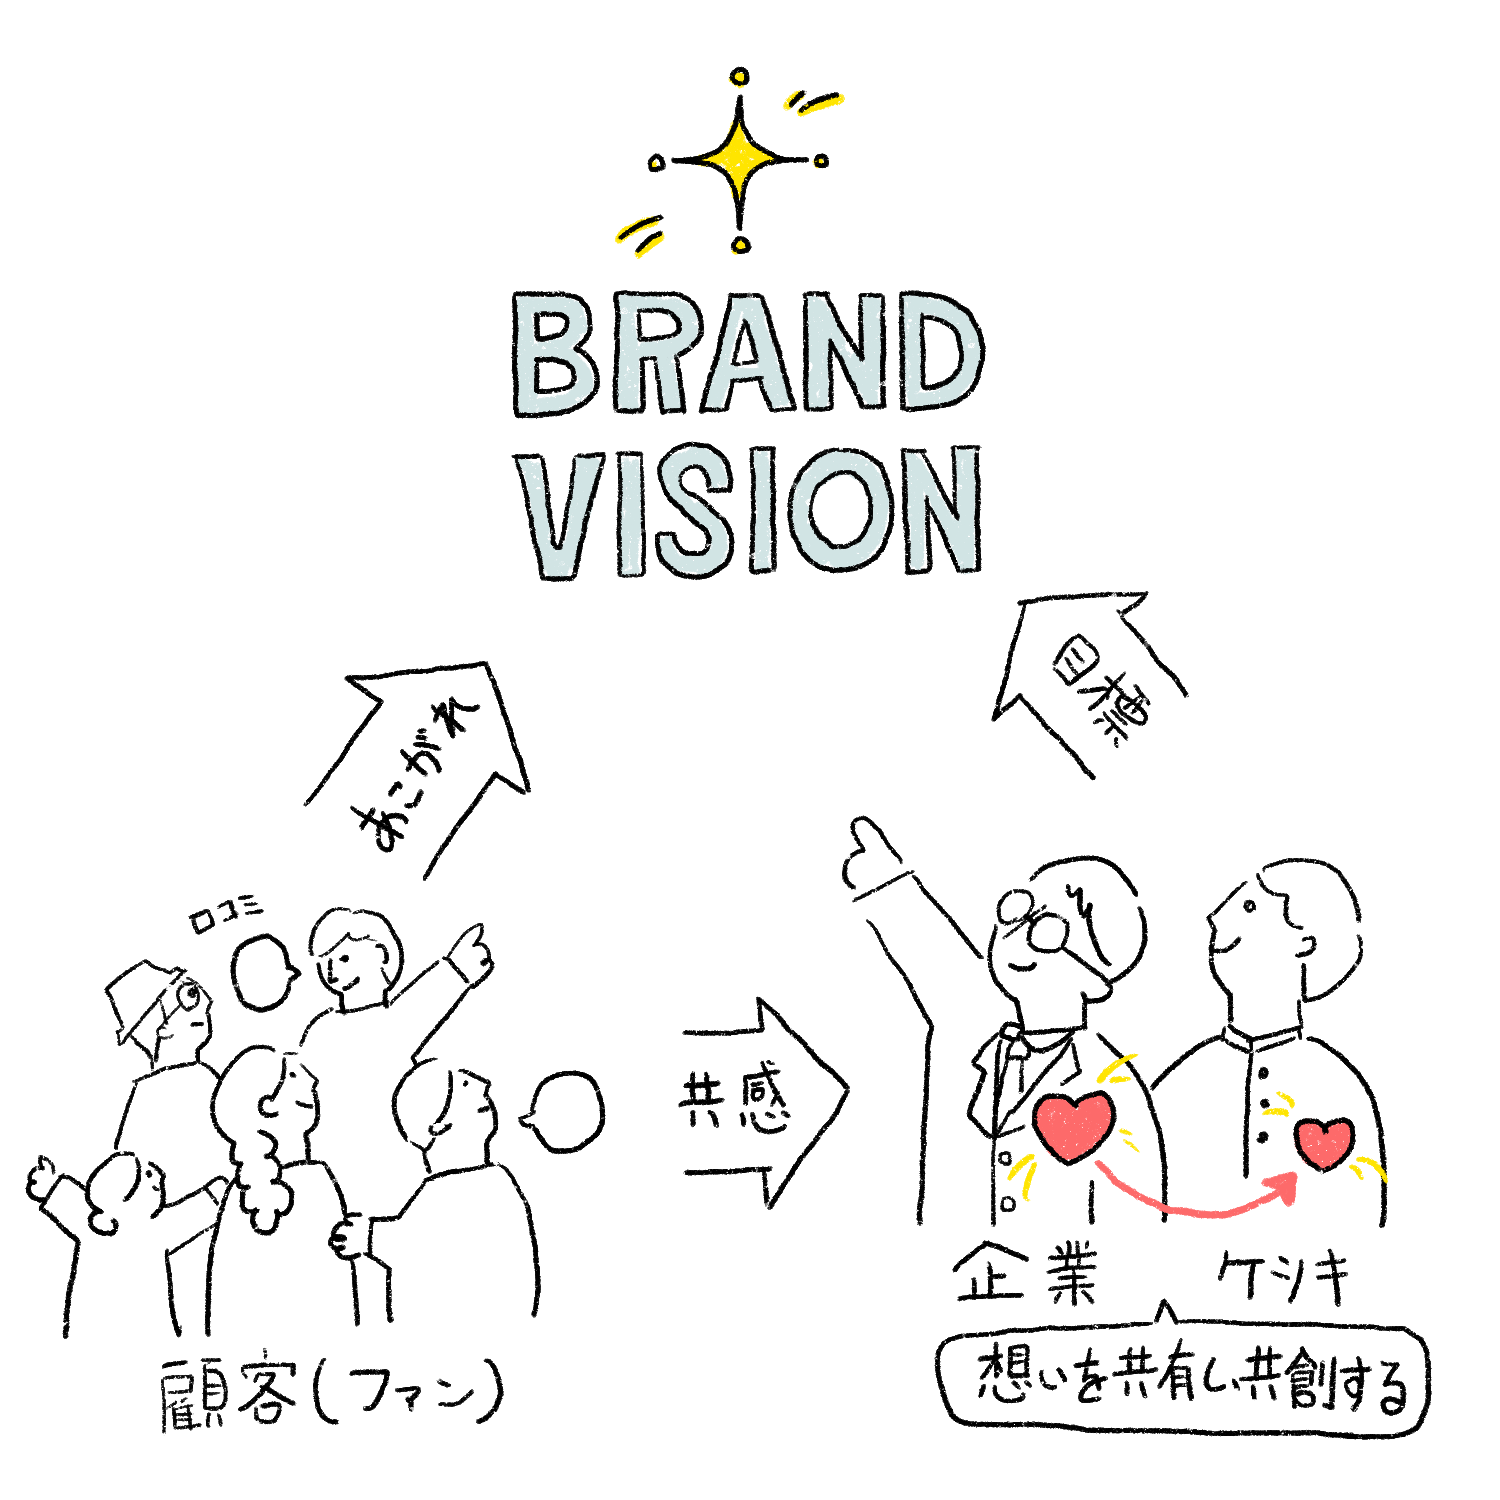 BRAND VISION